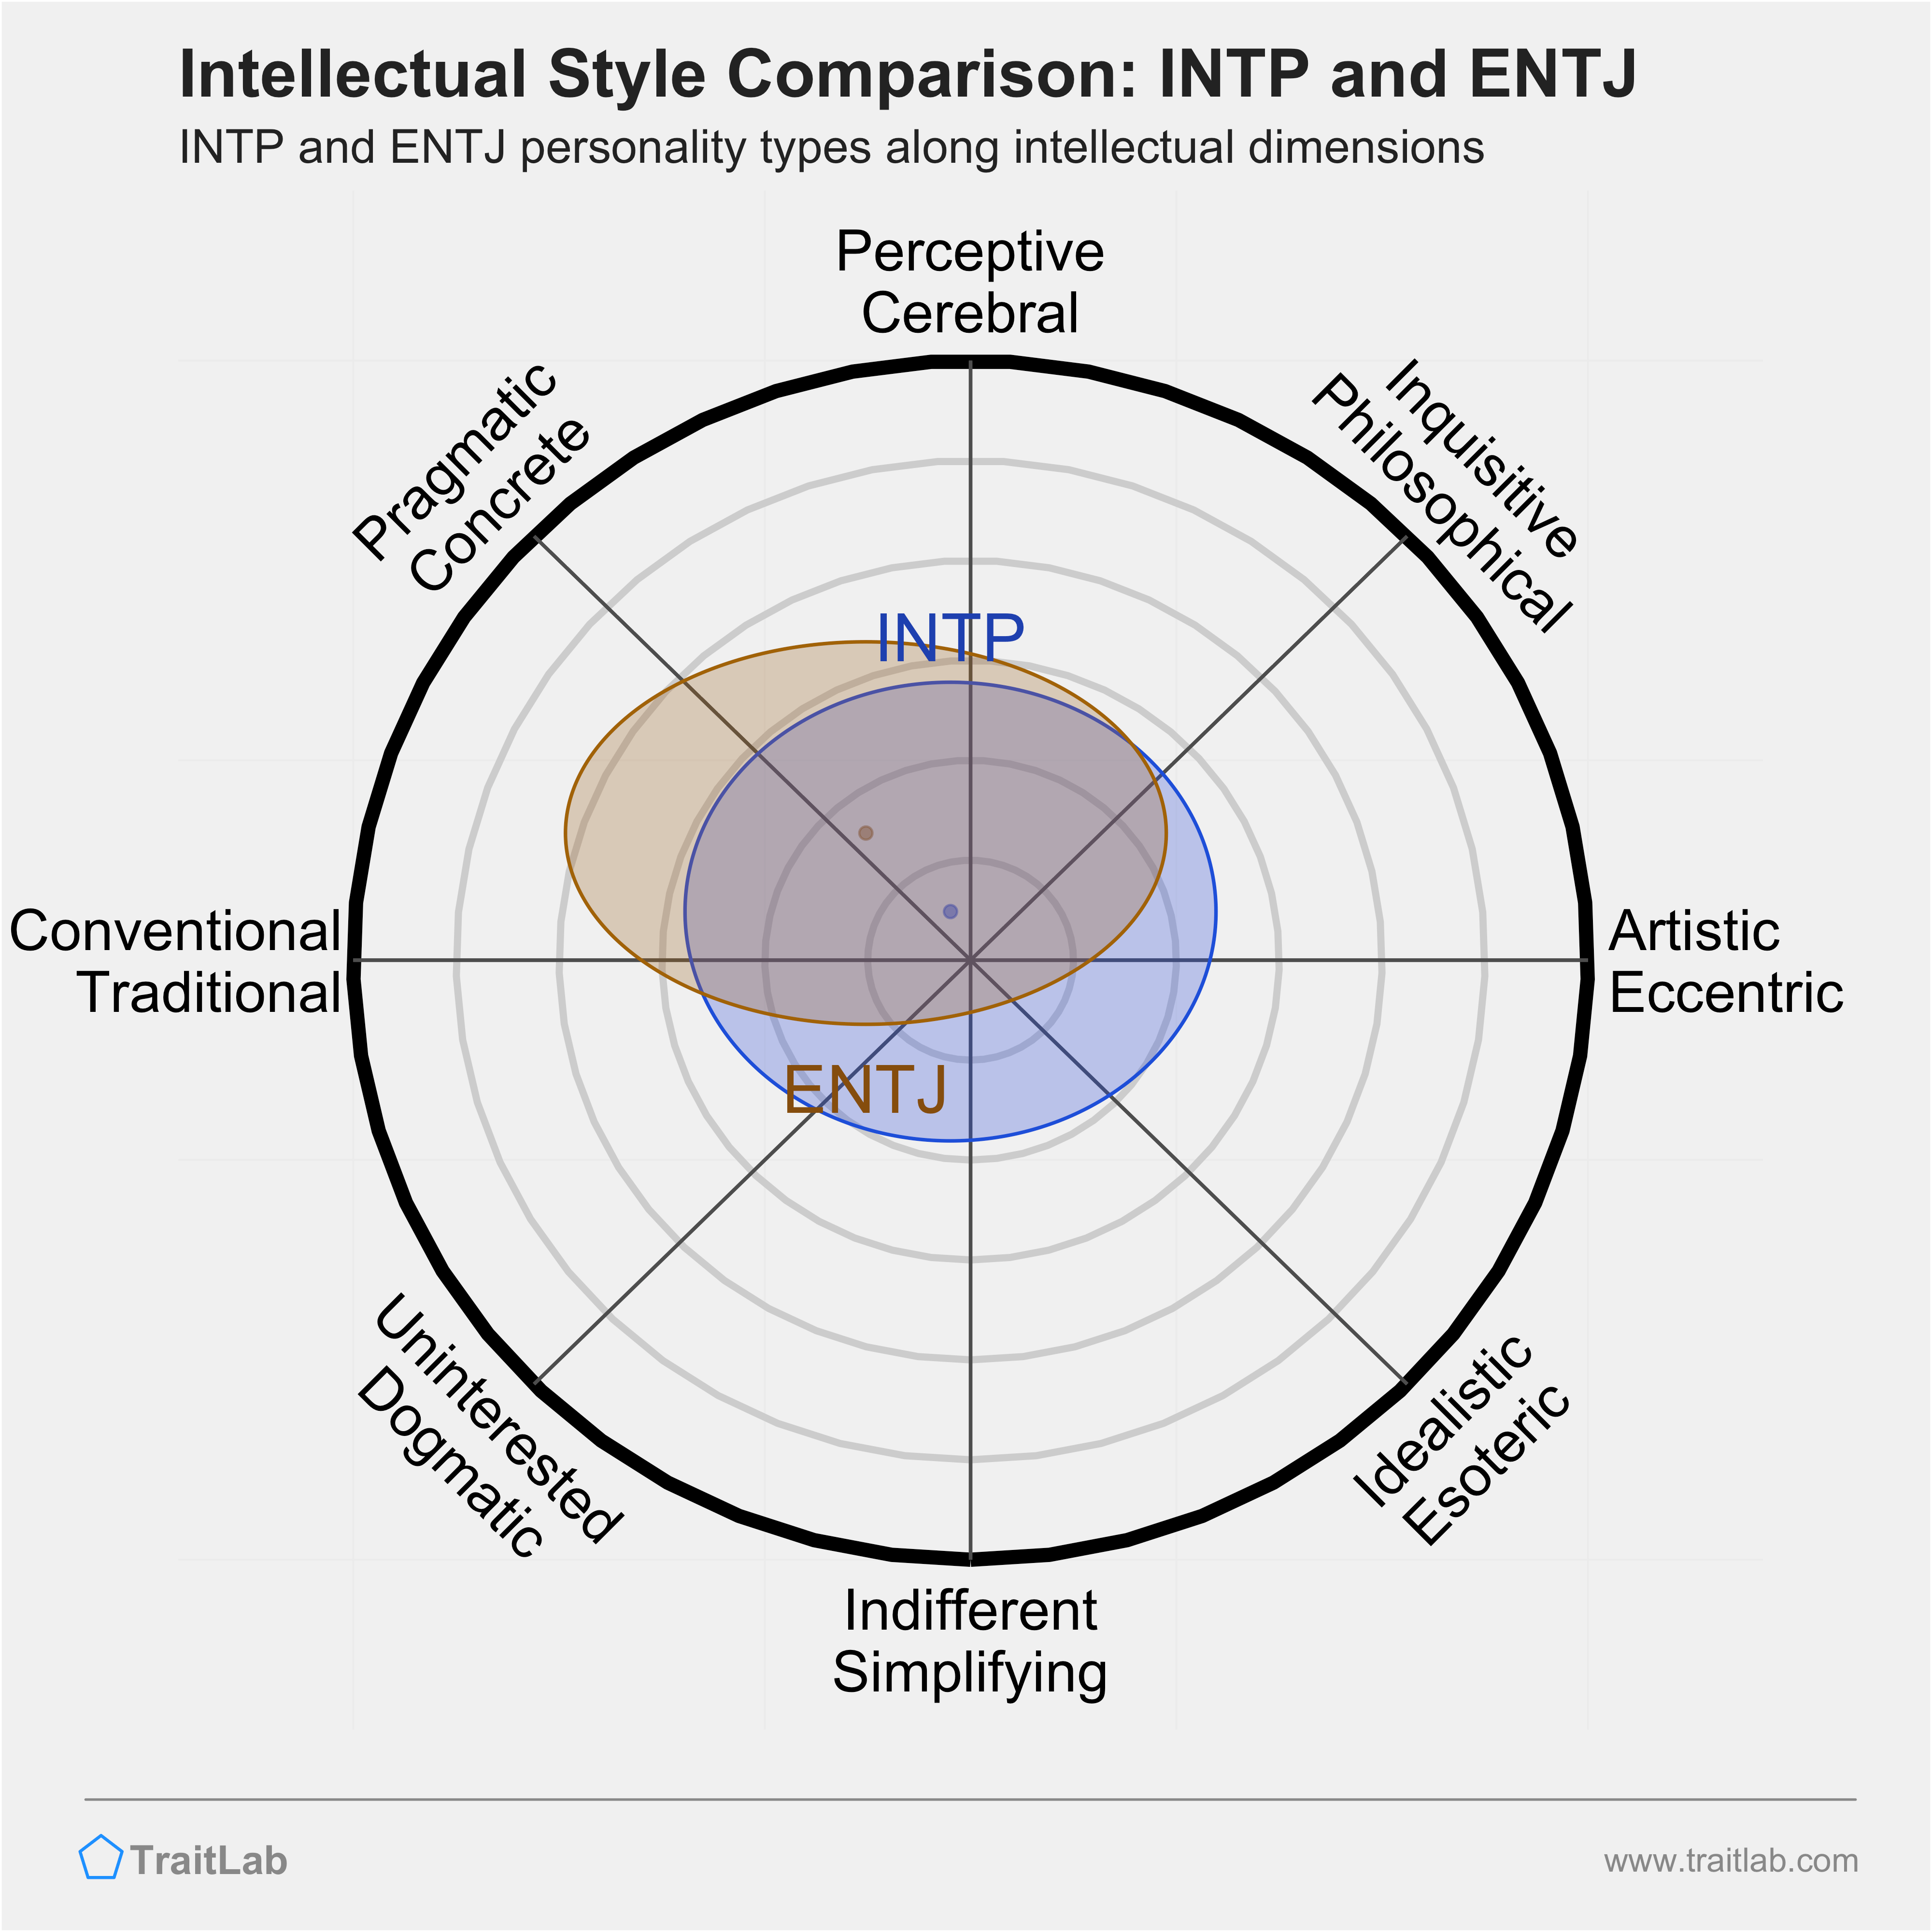 INTP and ENTJ comparison across intellectual dimensions